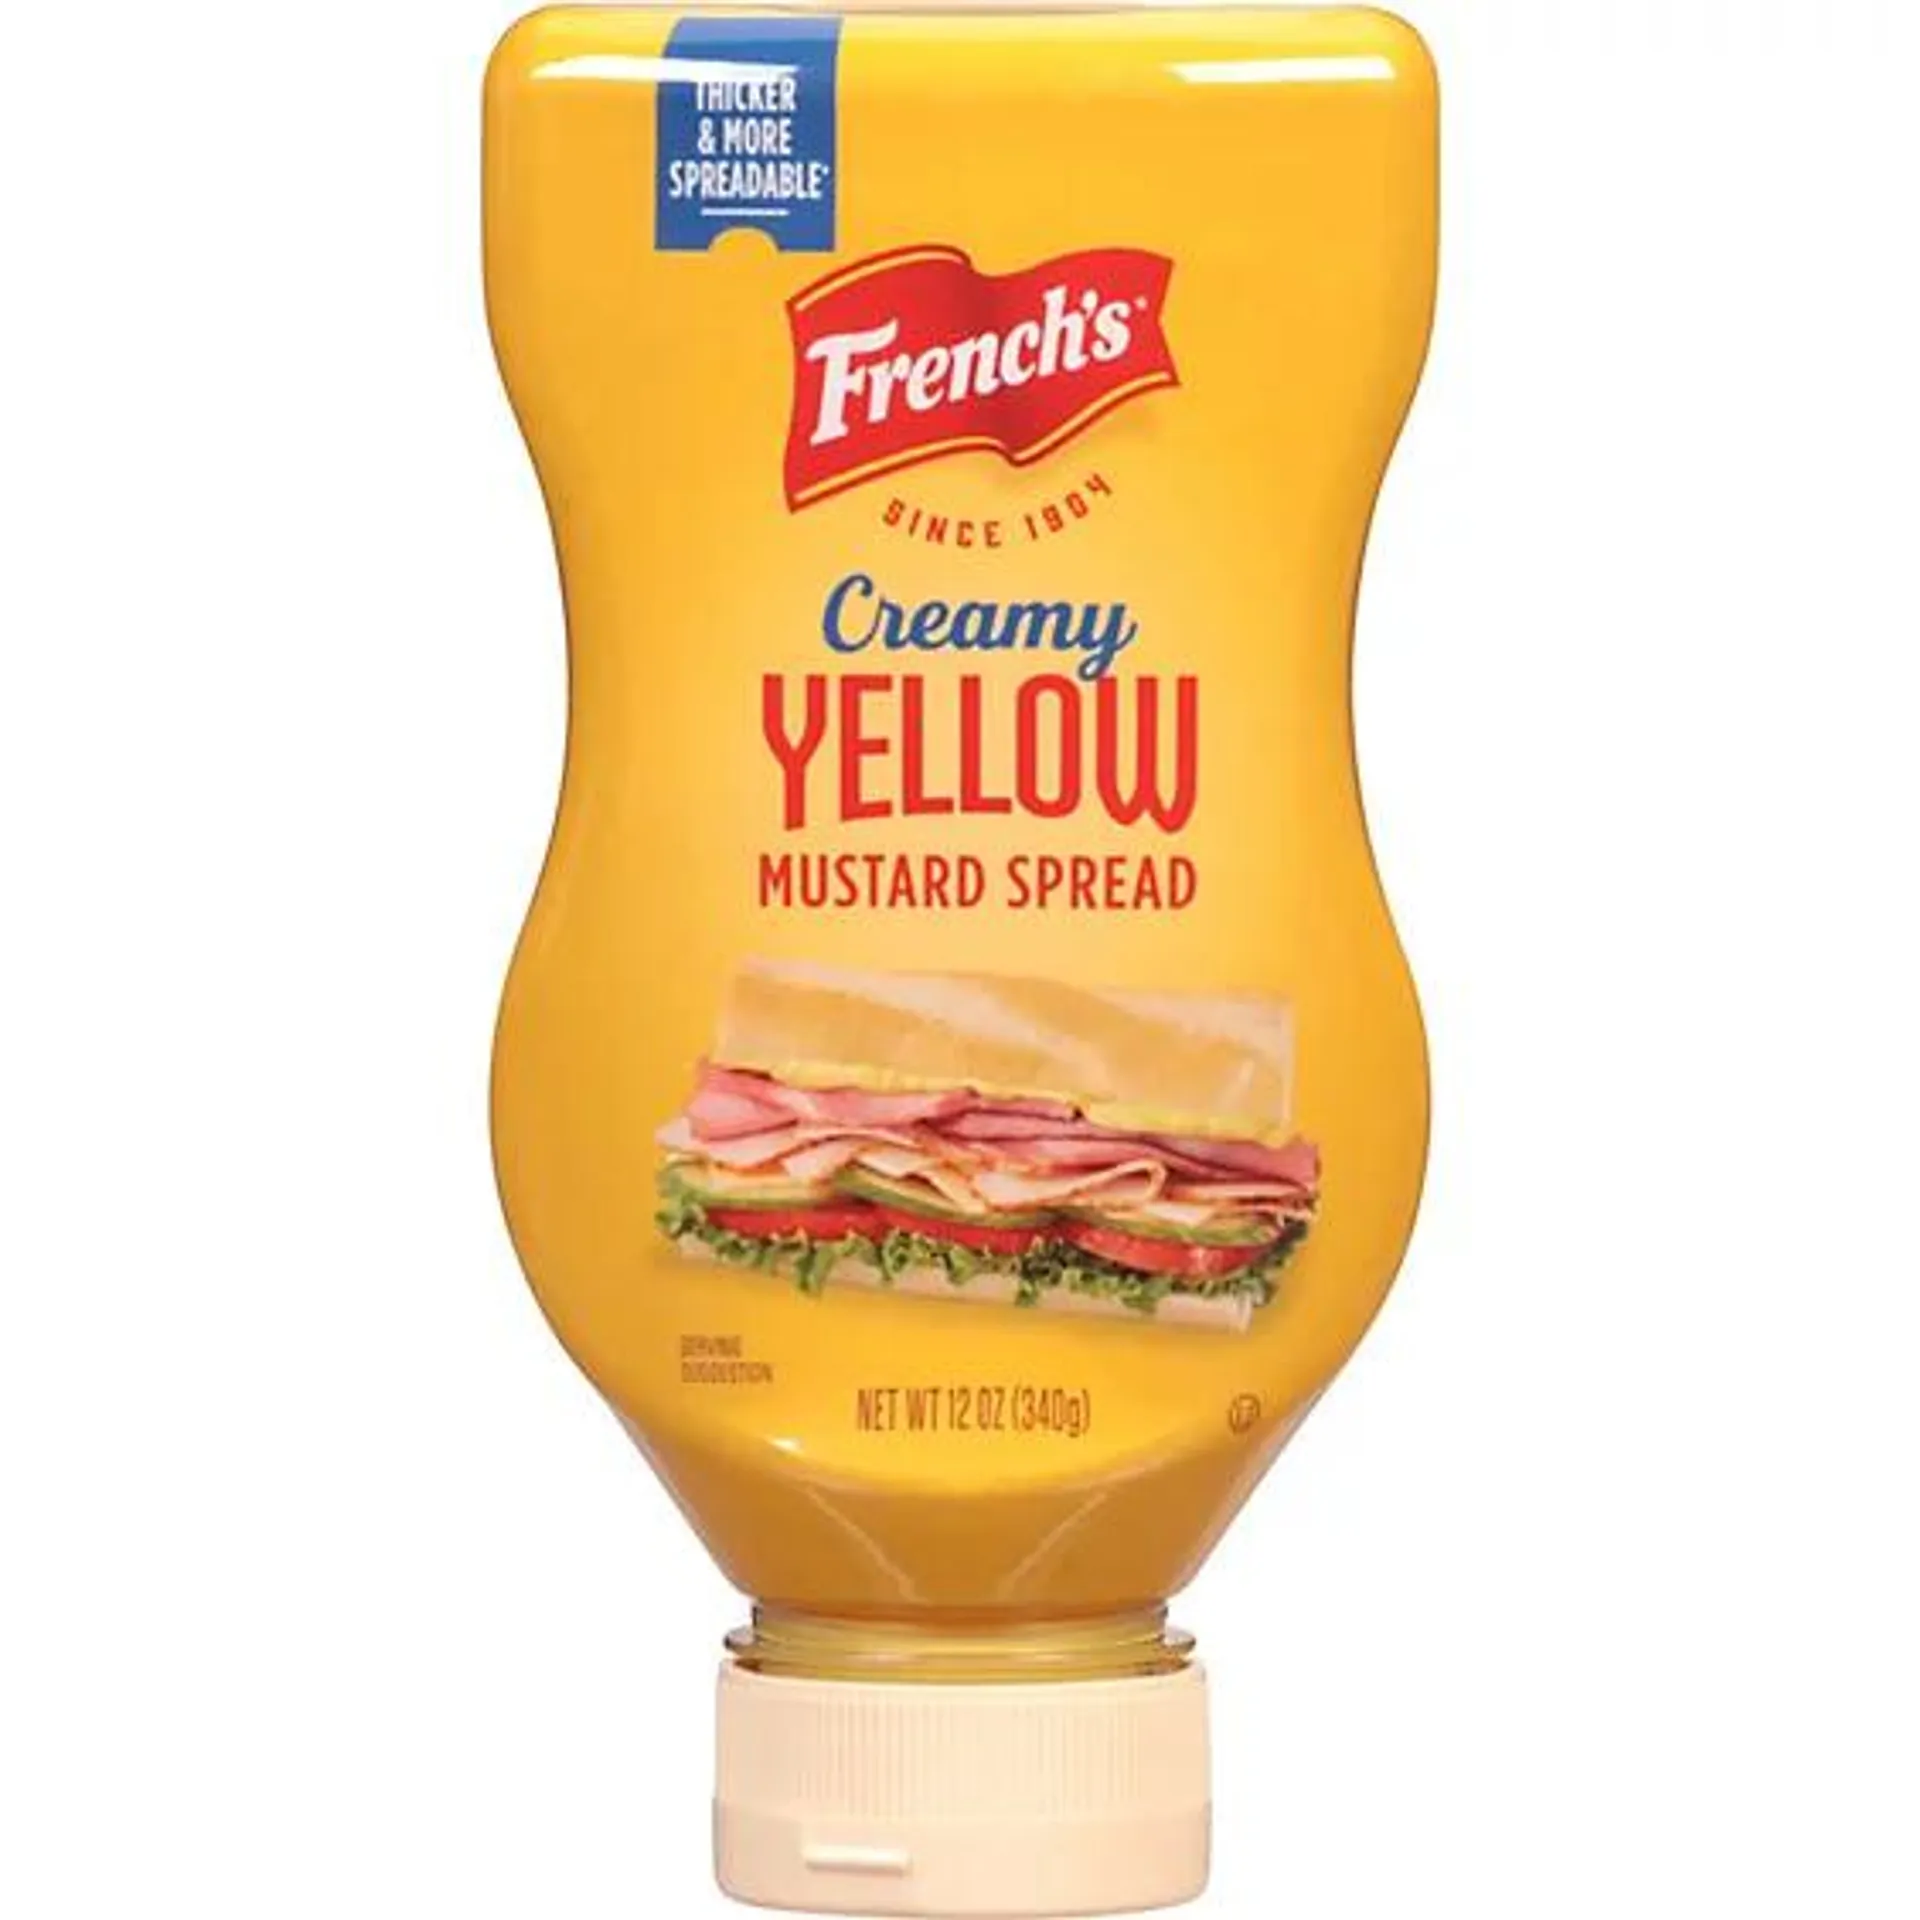 Creamy Yellow Mustard Spread